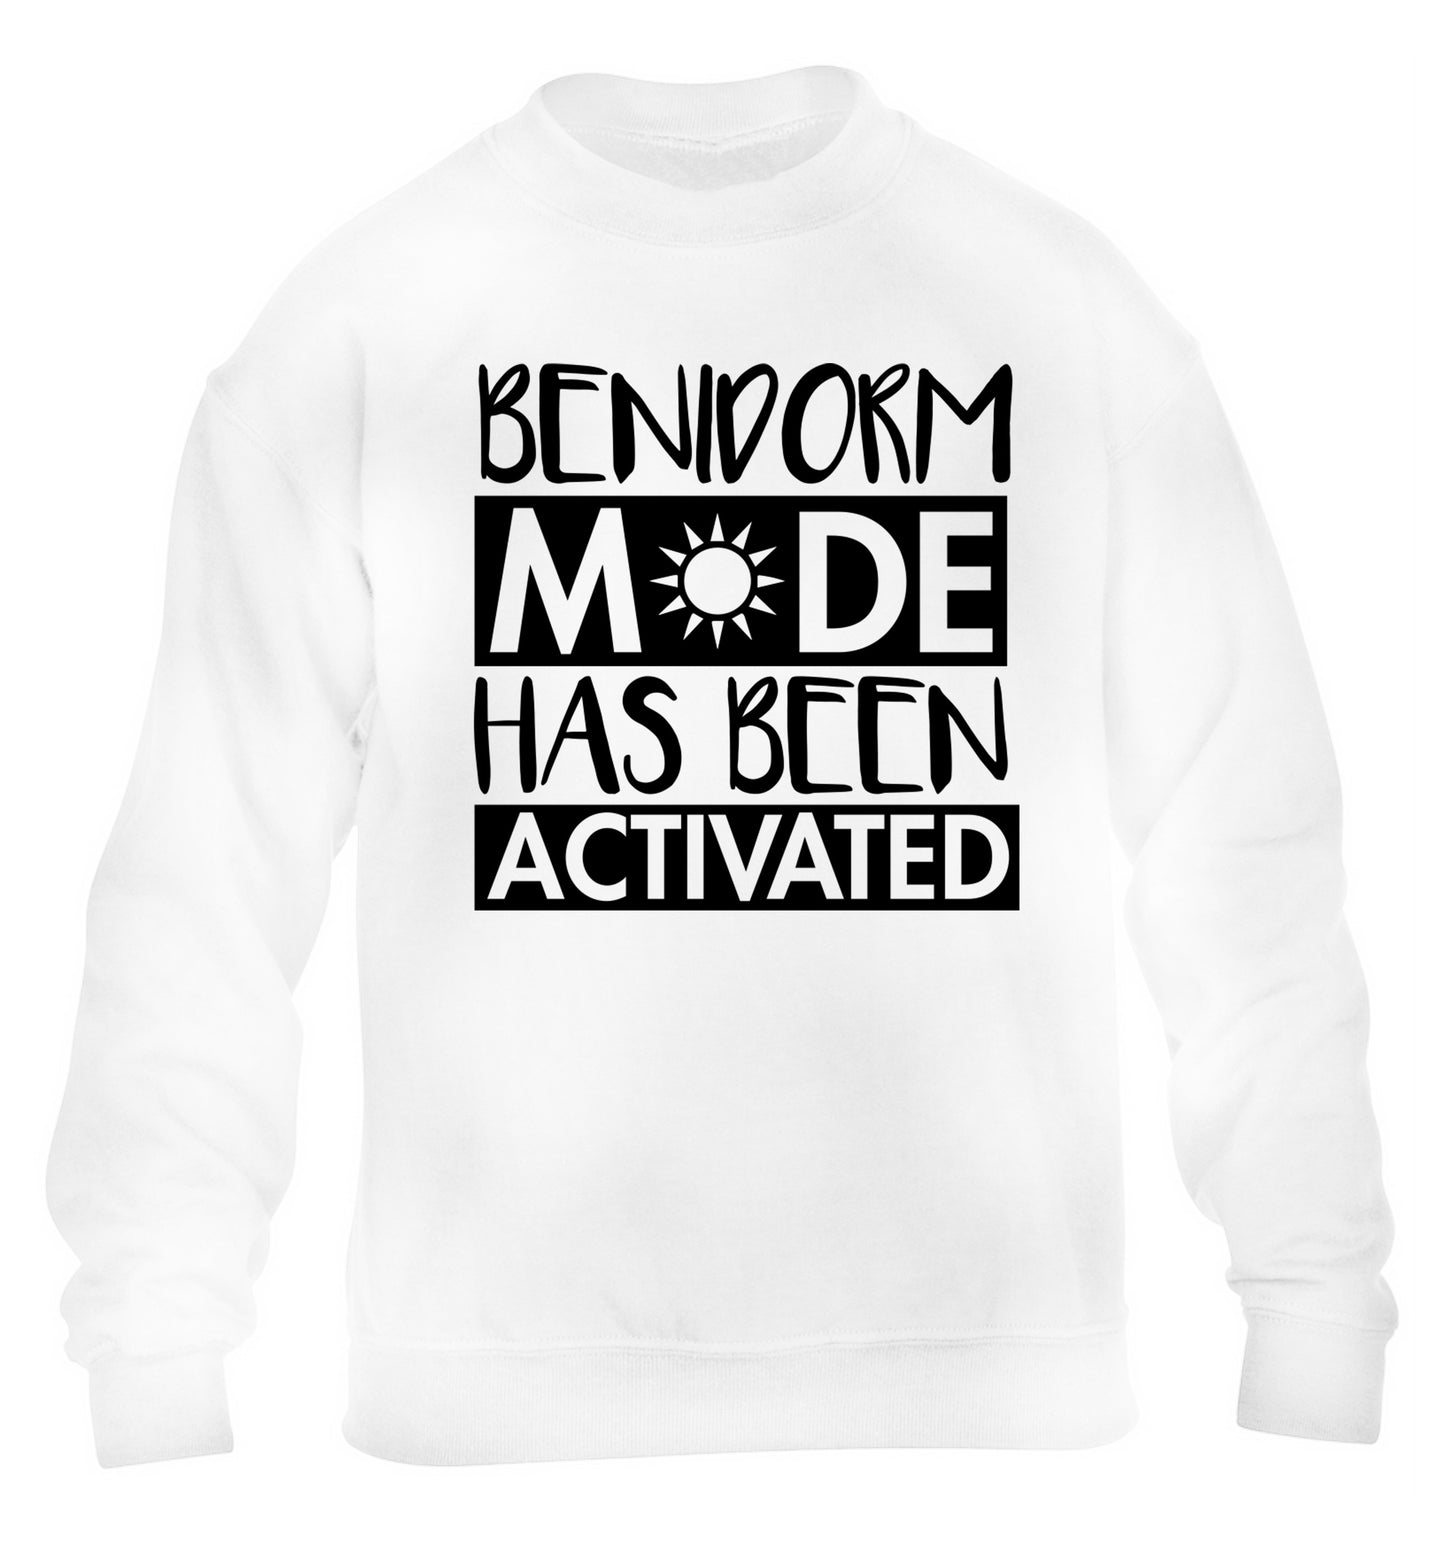 Benidorm mode has been activated children's white sweater 12-14 Years